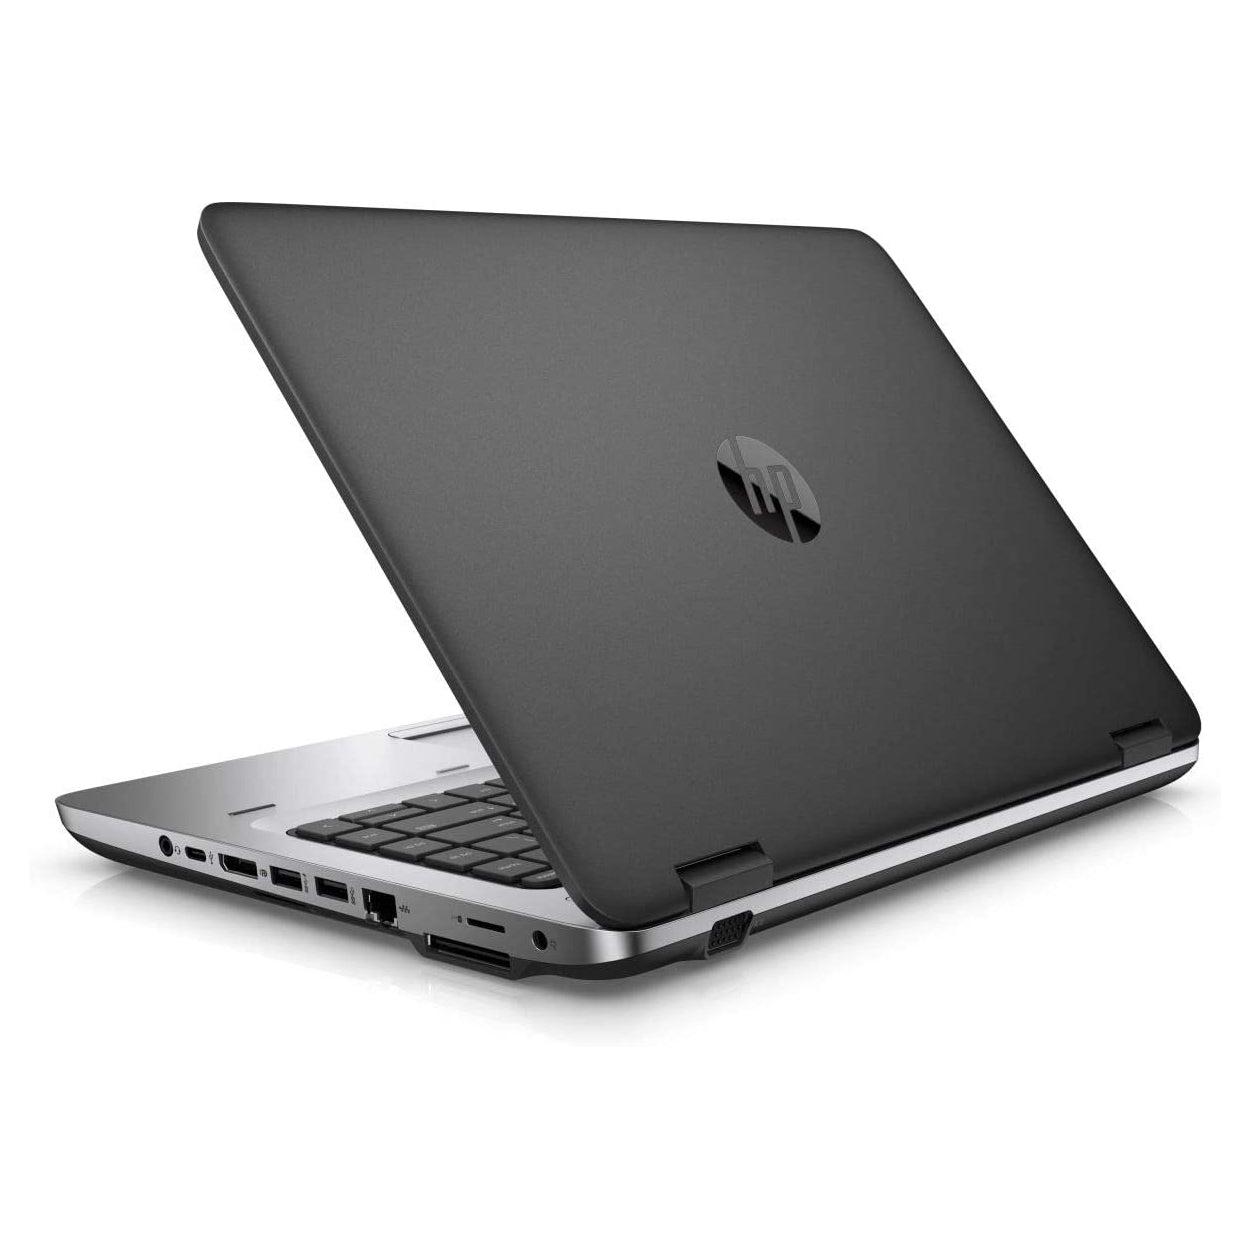 Hp ProBook 640 Core i7 Laptop Offers (Open Box)